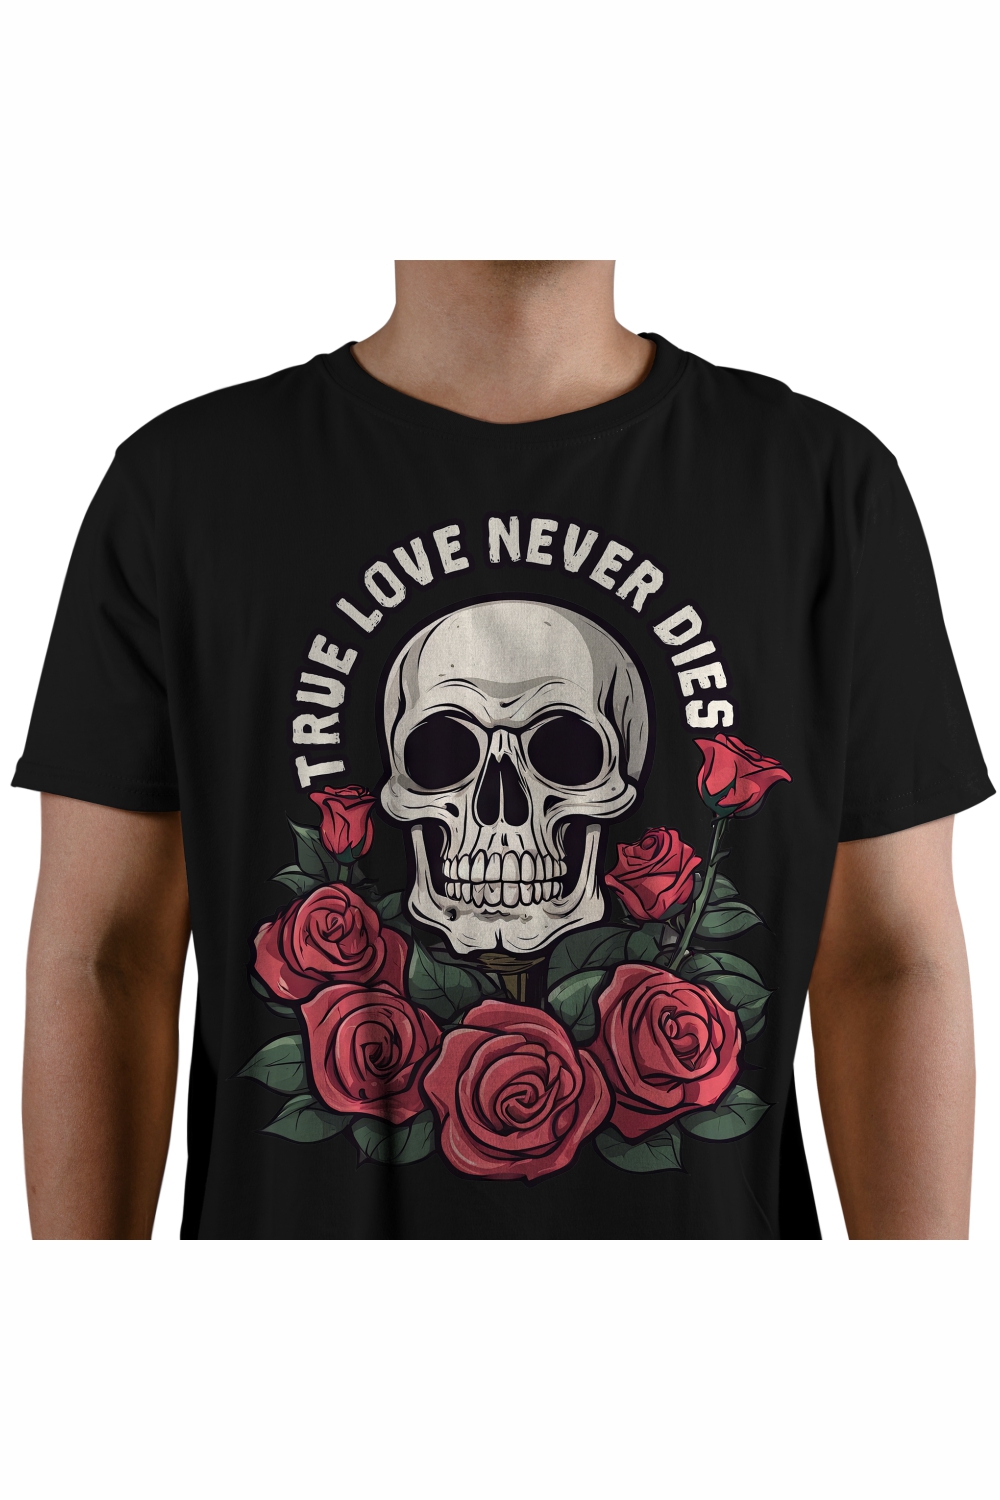 True Love Never Dies | Love T-Shirt Design PNG pinterest preview image.